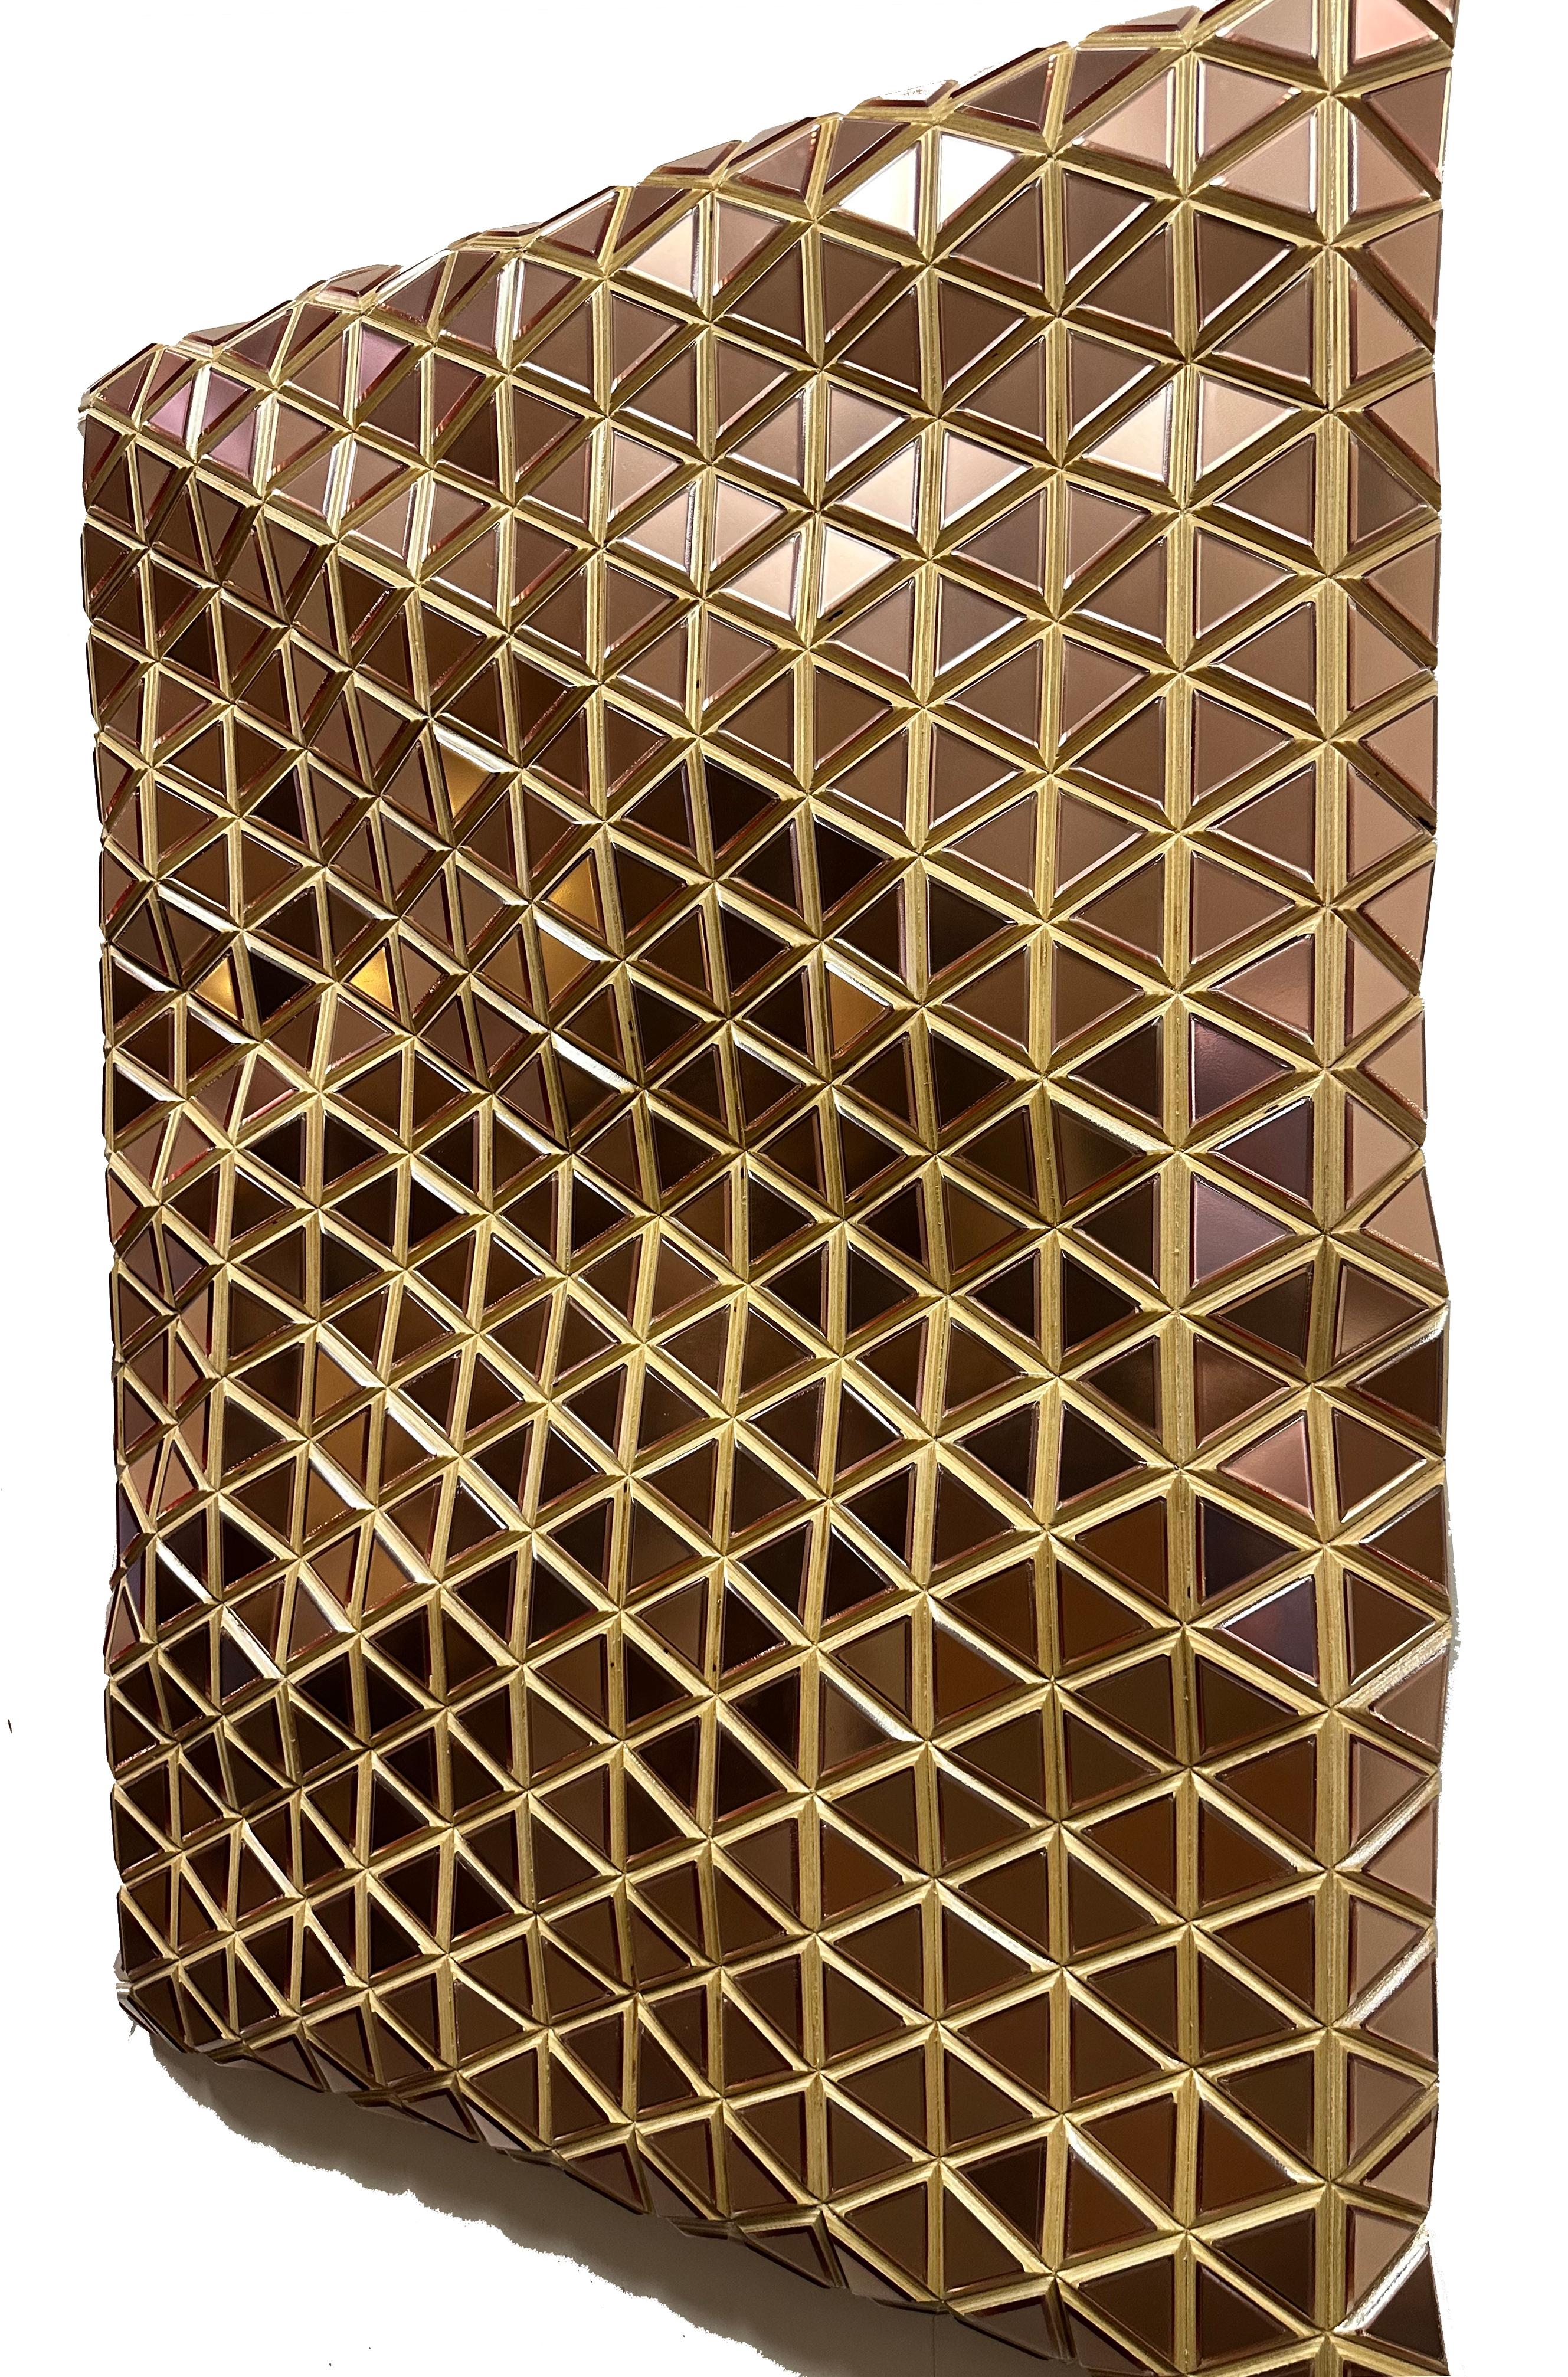 Rose Gold Shimmers, Metallic wooden carved modern wall sculpture, geometric  - Contemporary Sculpture by Hugo Garcia-Urrutia